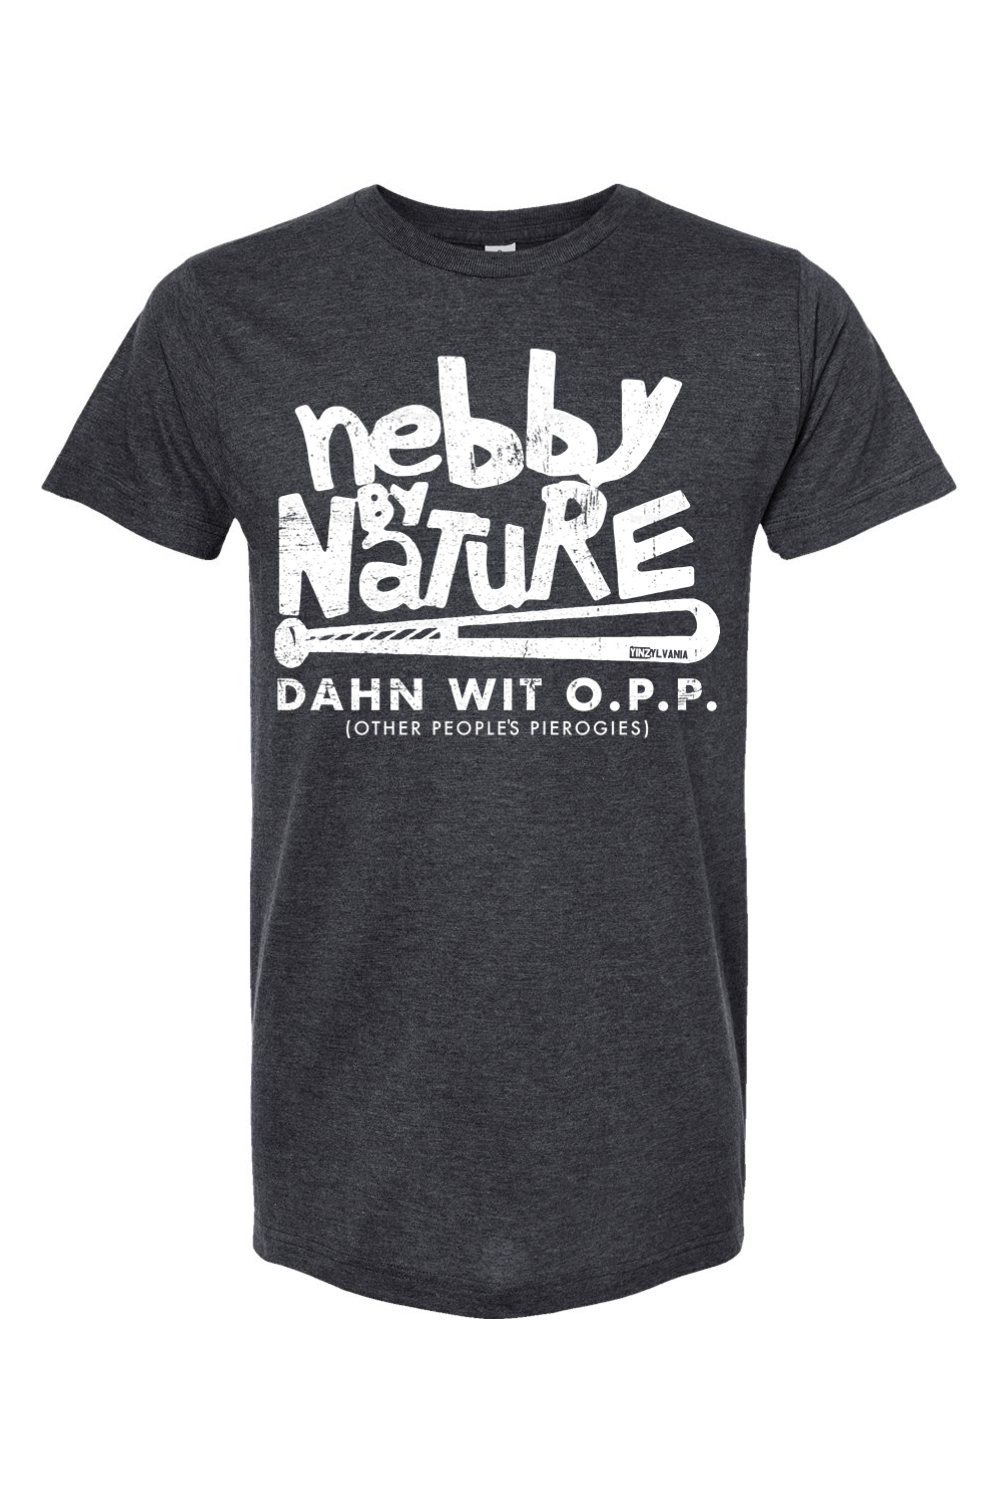 Nebby by Nature - Yinzylvania